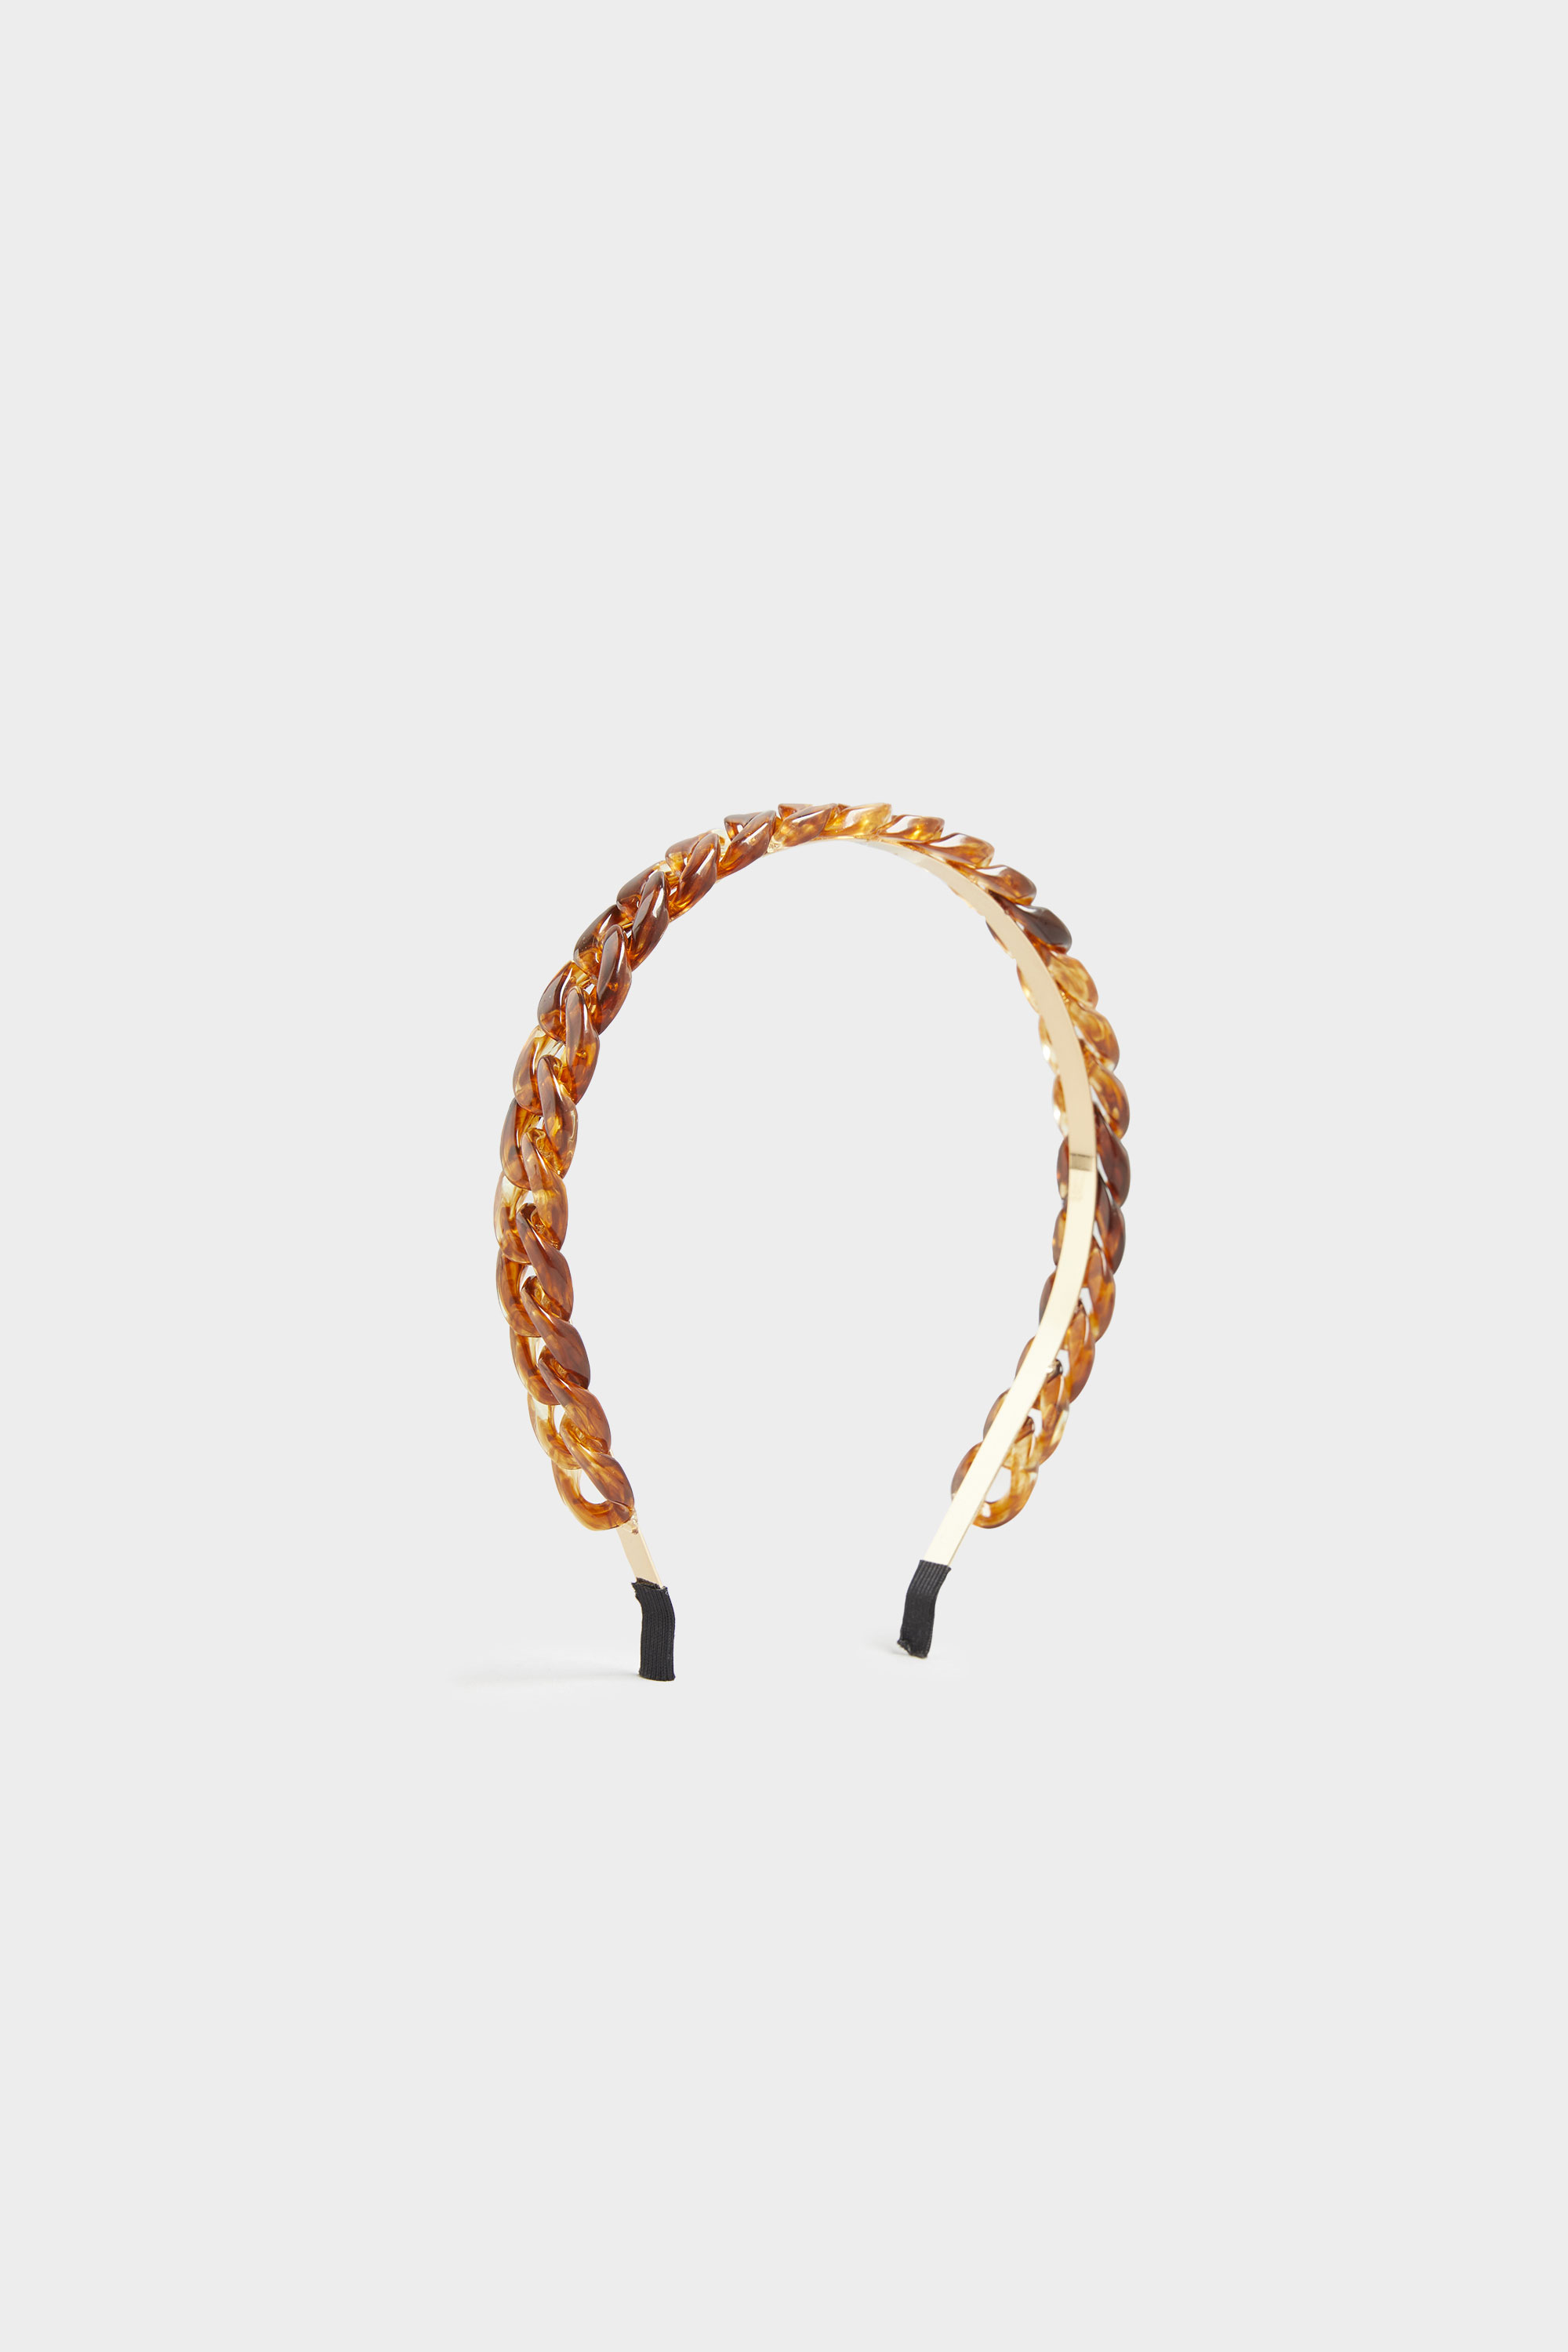 2 PACK Black & Brown Chain Link Headbands 1